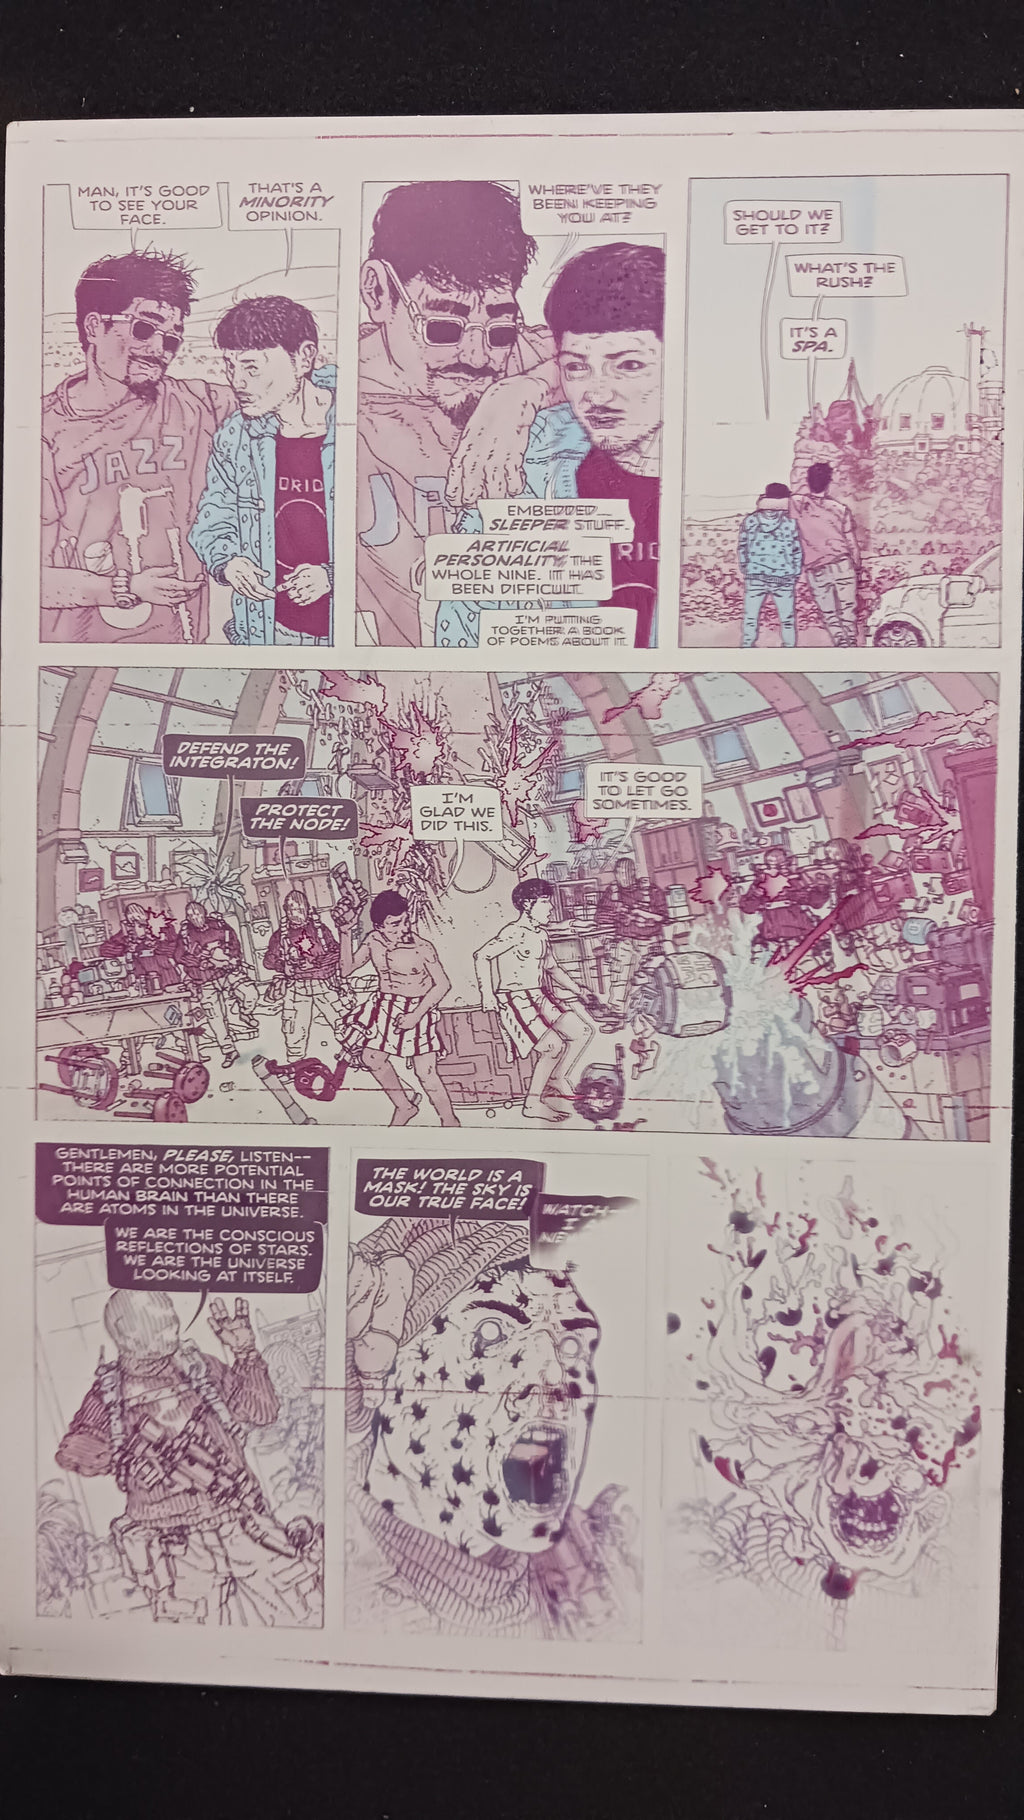 Agent of W.O.R.L.D.E #2 - Page 2 - PRESSWORKS - Comic Art -  Printer Plate - Magenta